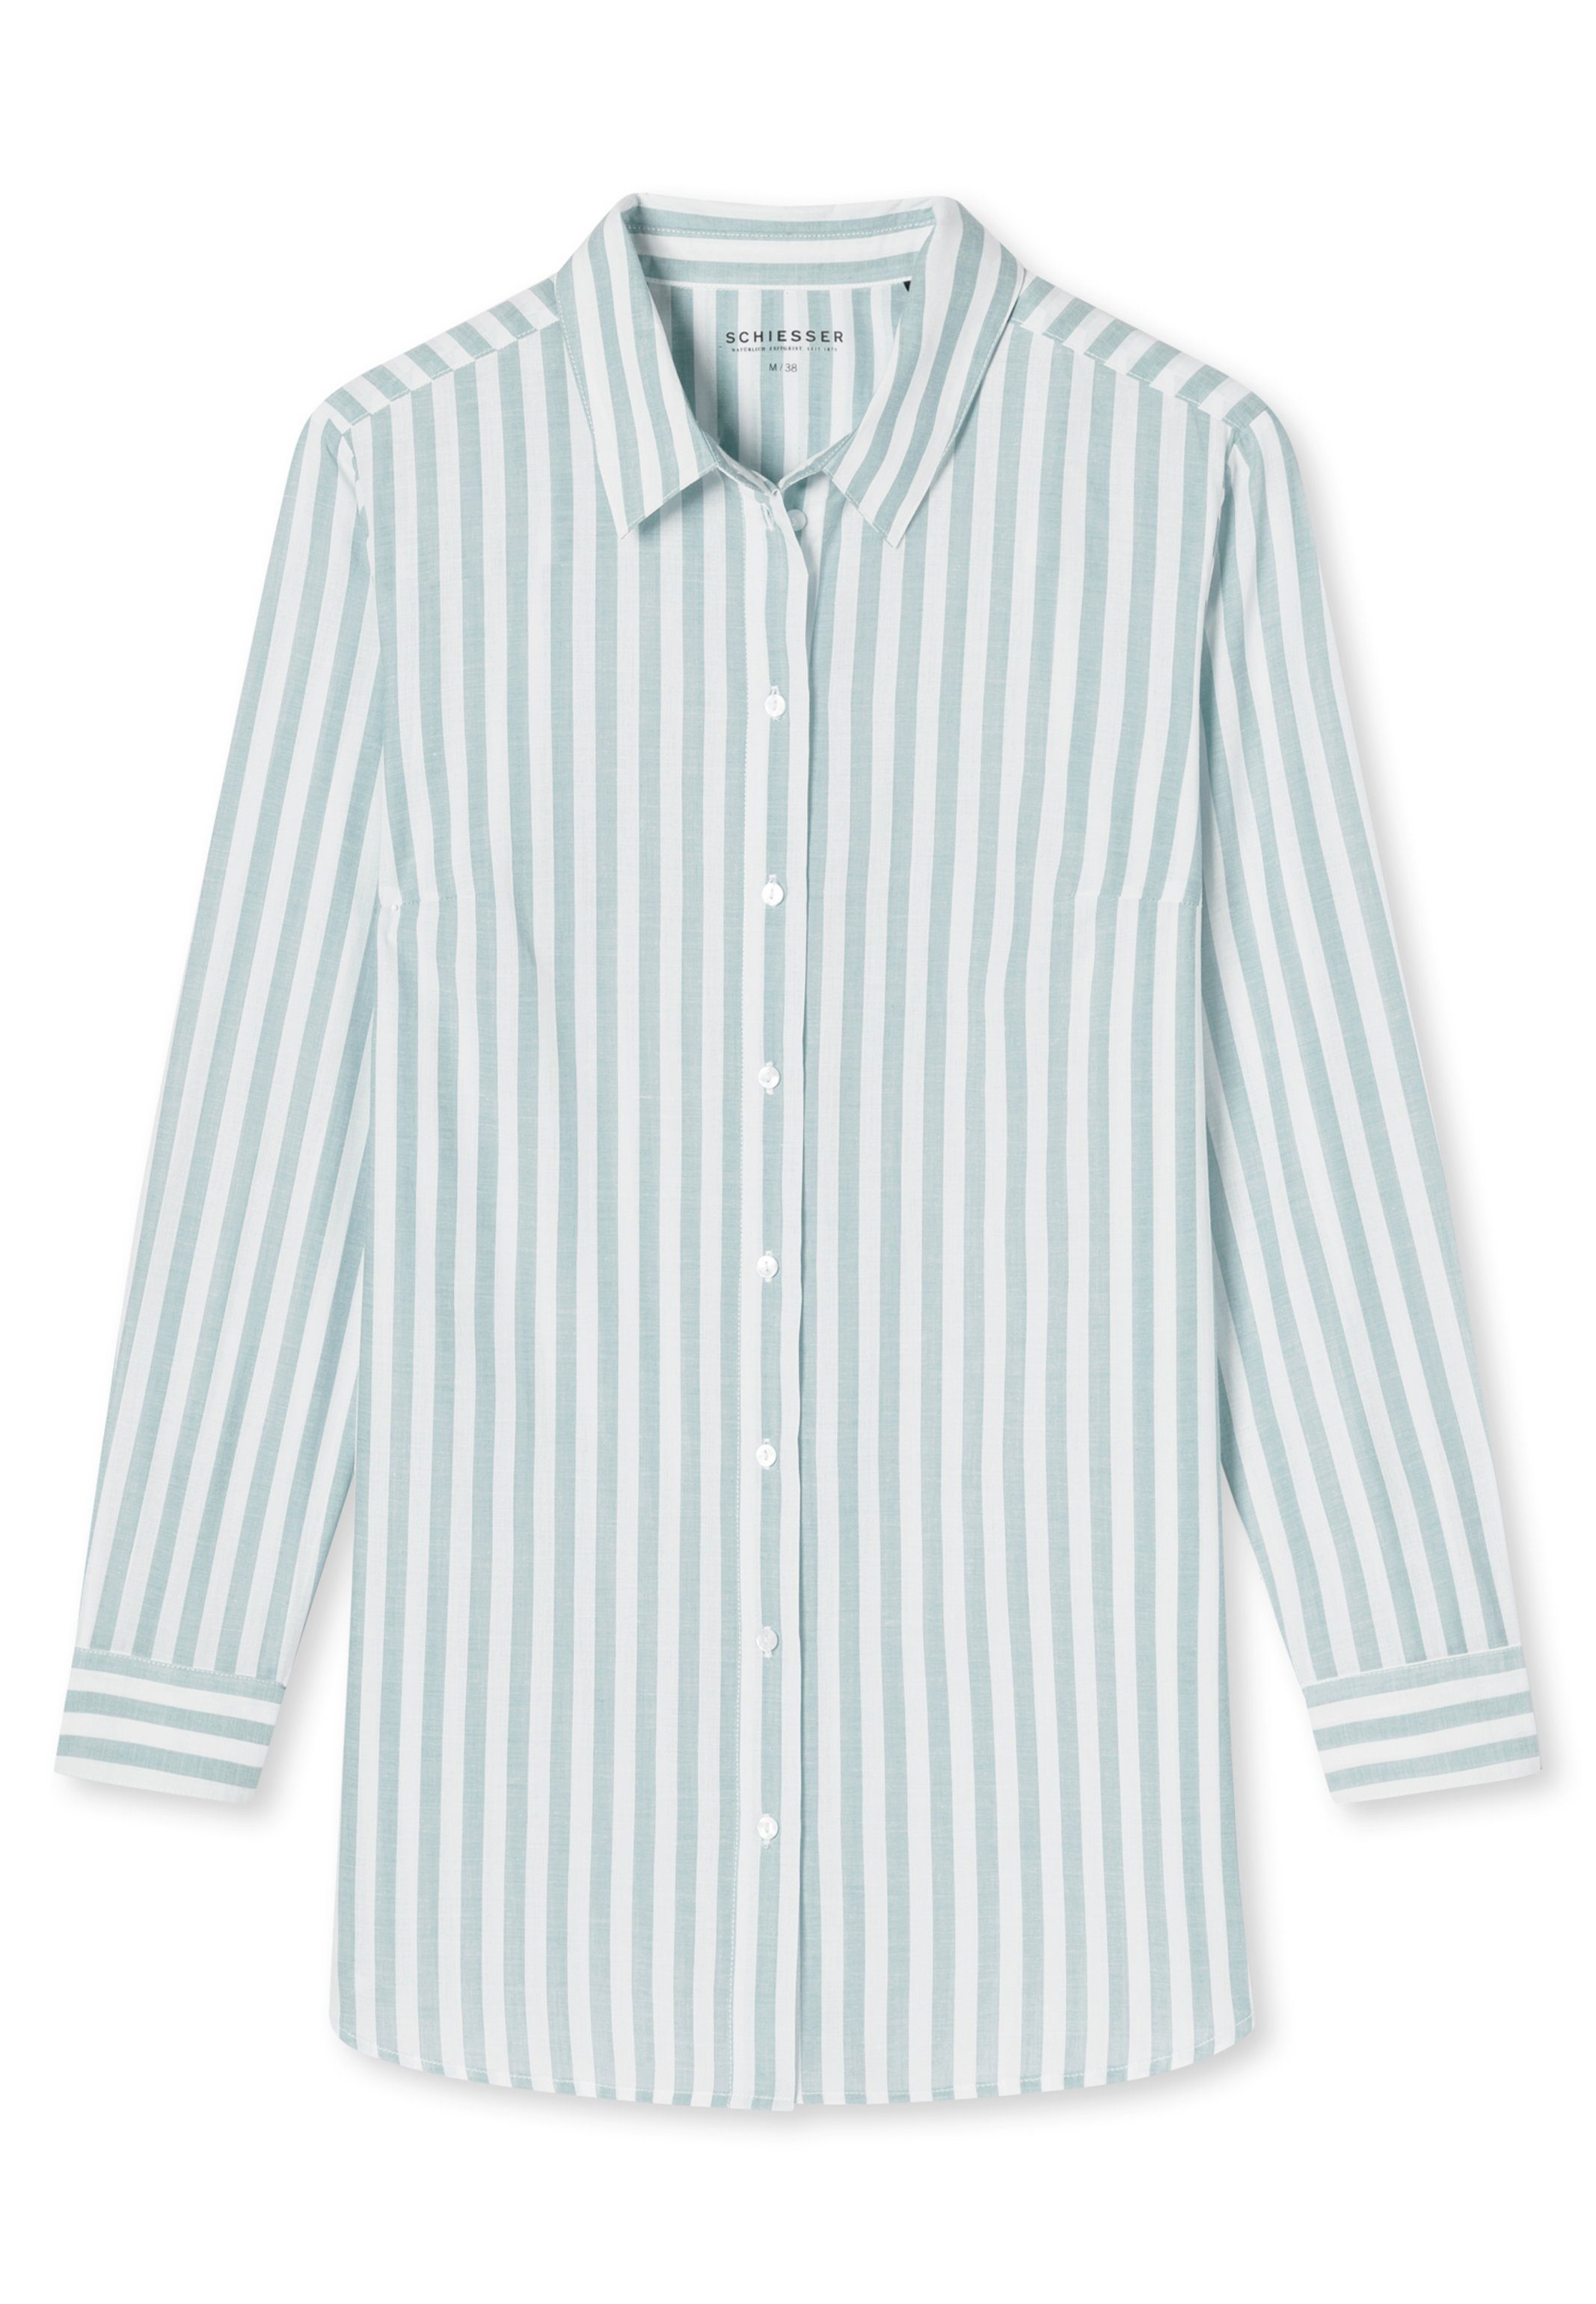 Pyjama - Nachthemd (1-tlg) Story Baumwolle - Schiesser Hellblau Nachthemd